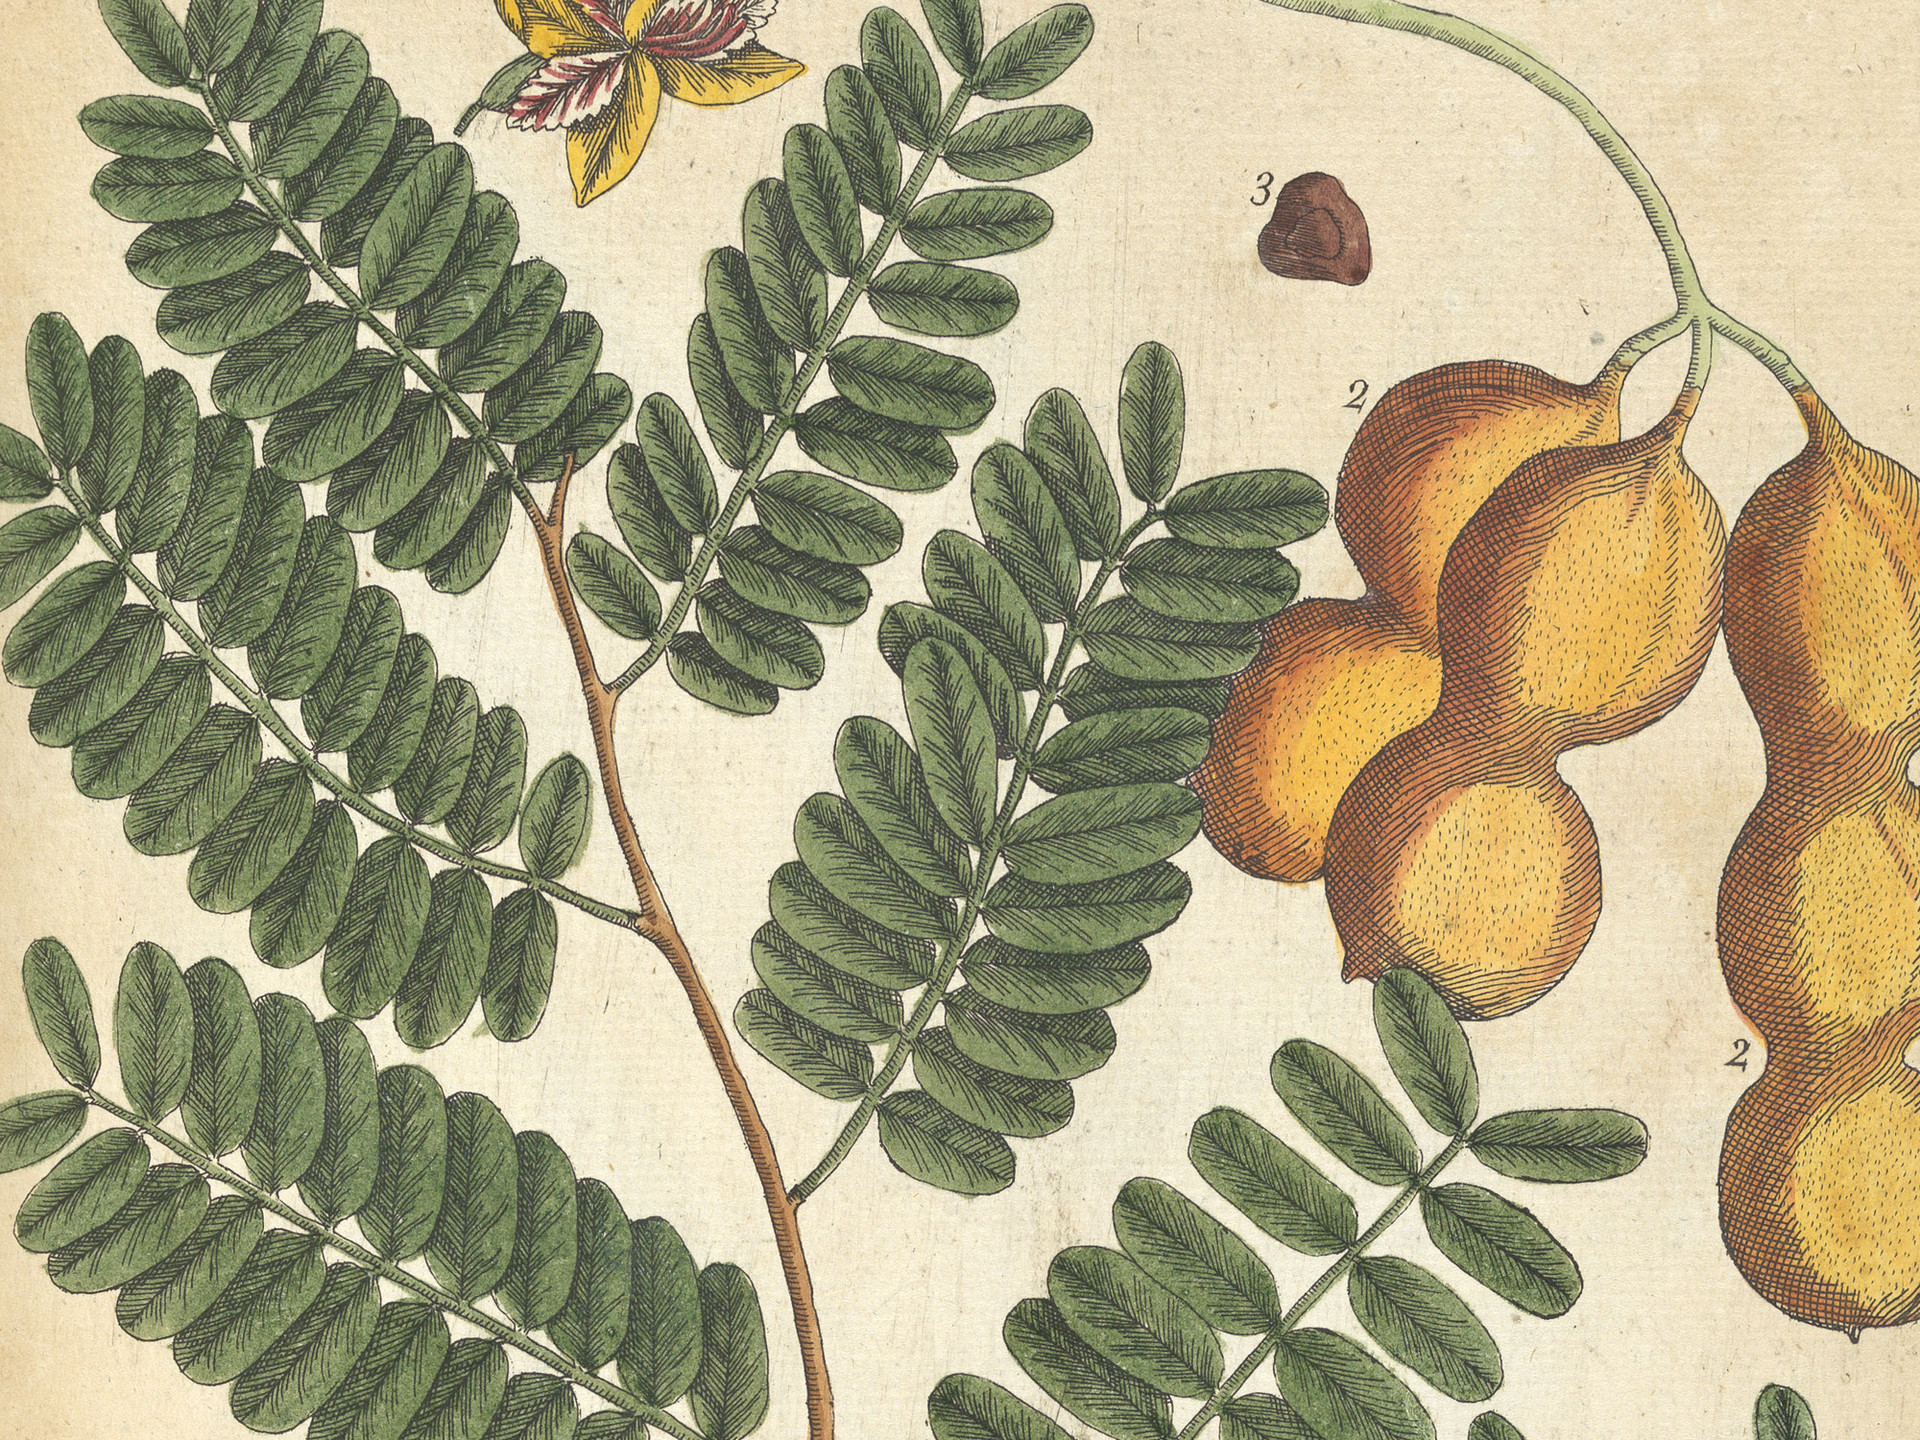 Elizabeth Blackwell's Curious Herbal